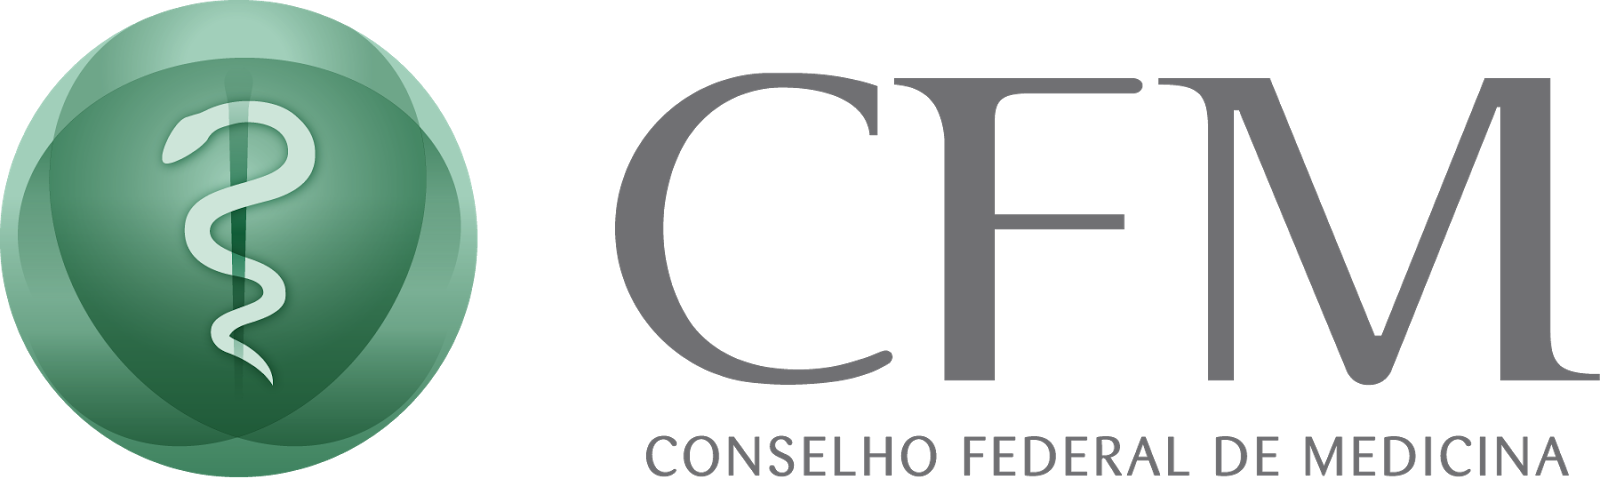 SFE Brazil_Empresas_CFM_001